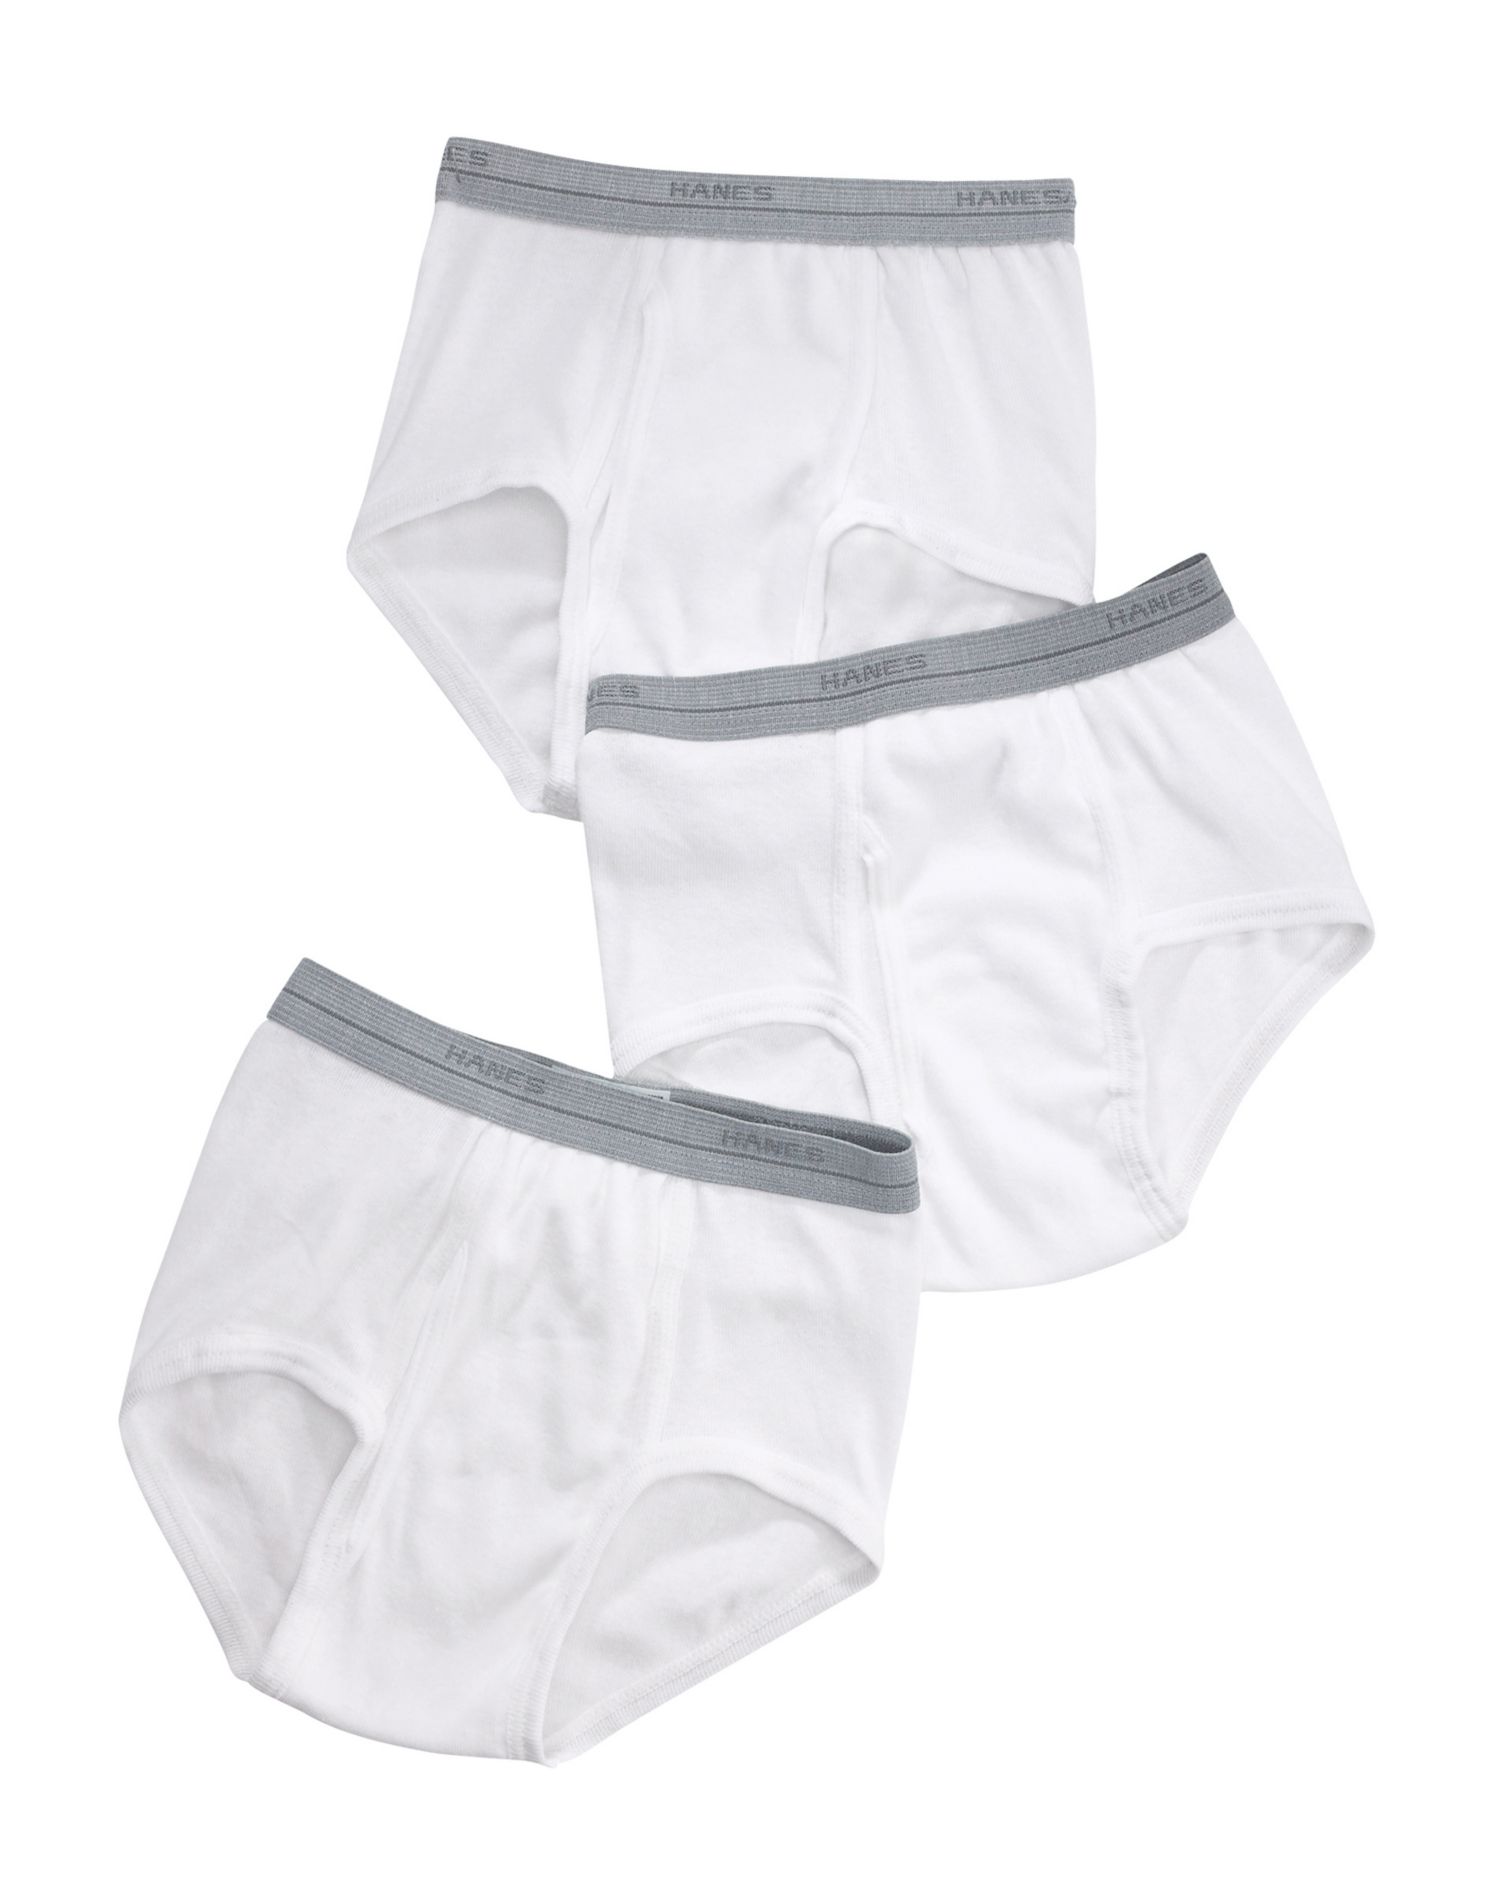 Hanes 6 - Pk Briefs White, White, LG at  Men's Clothing store